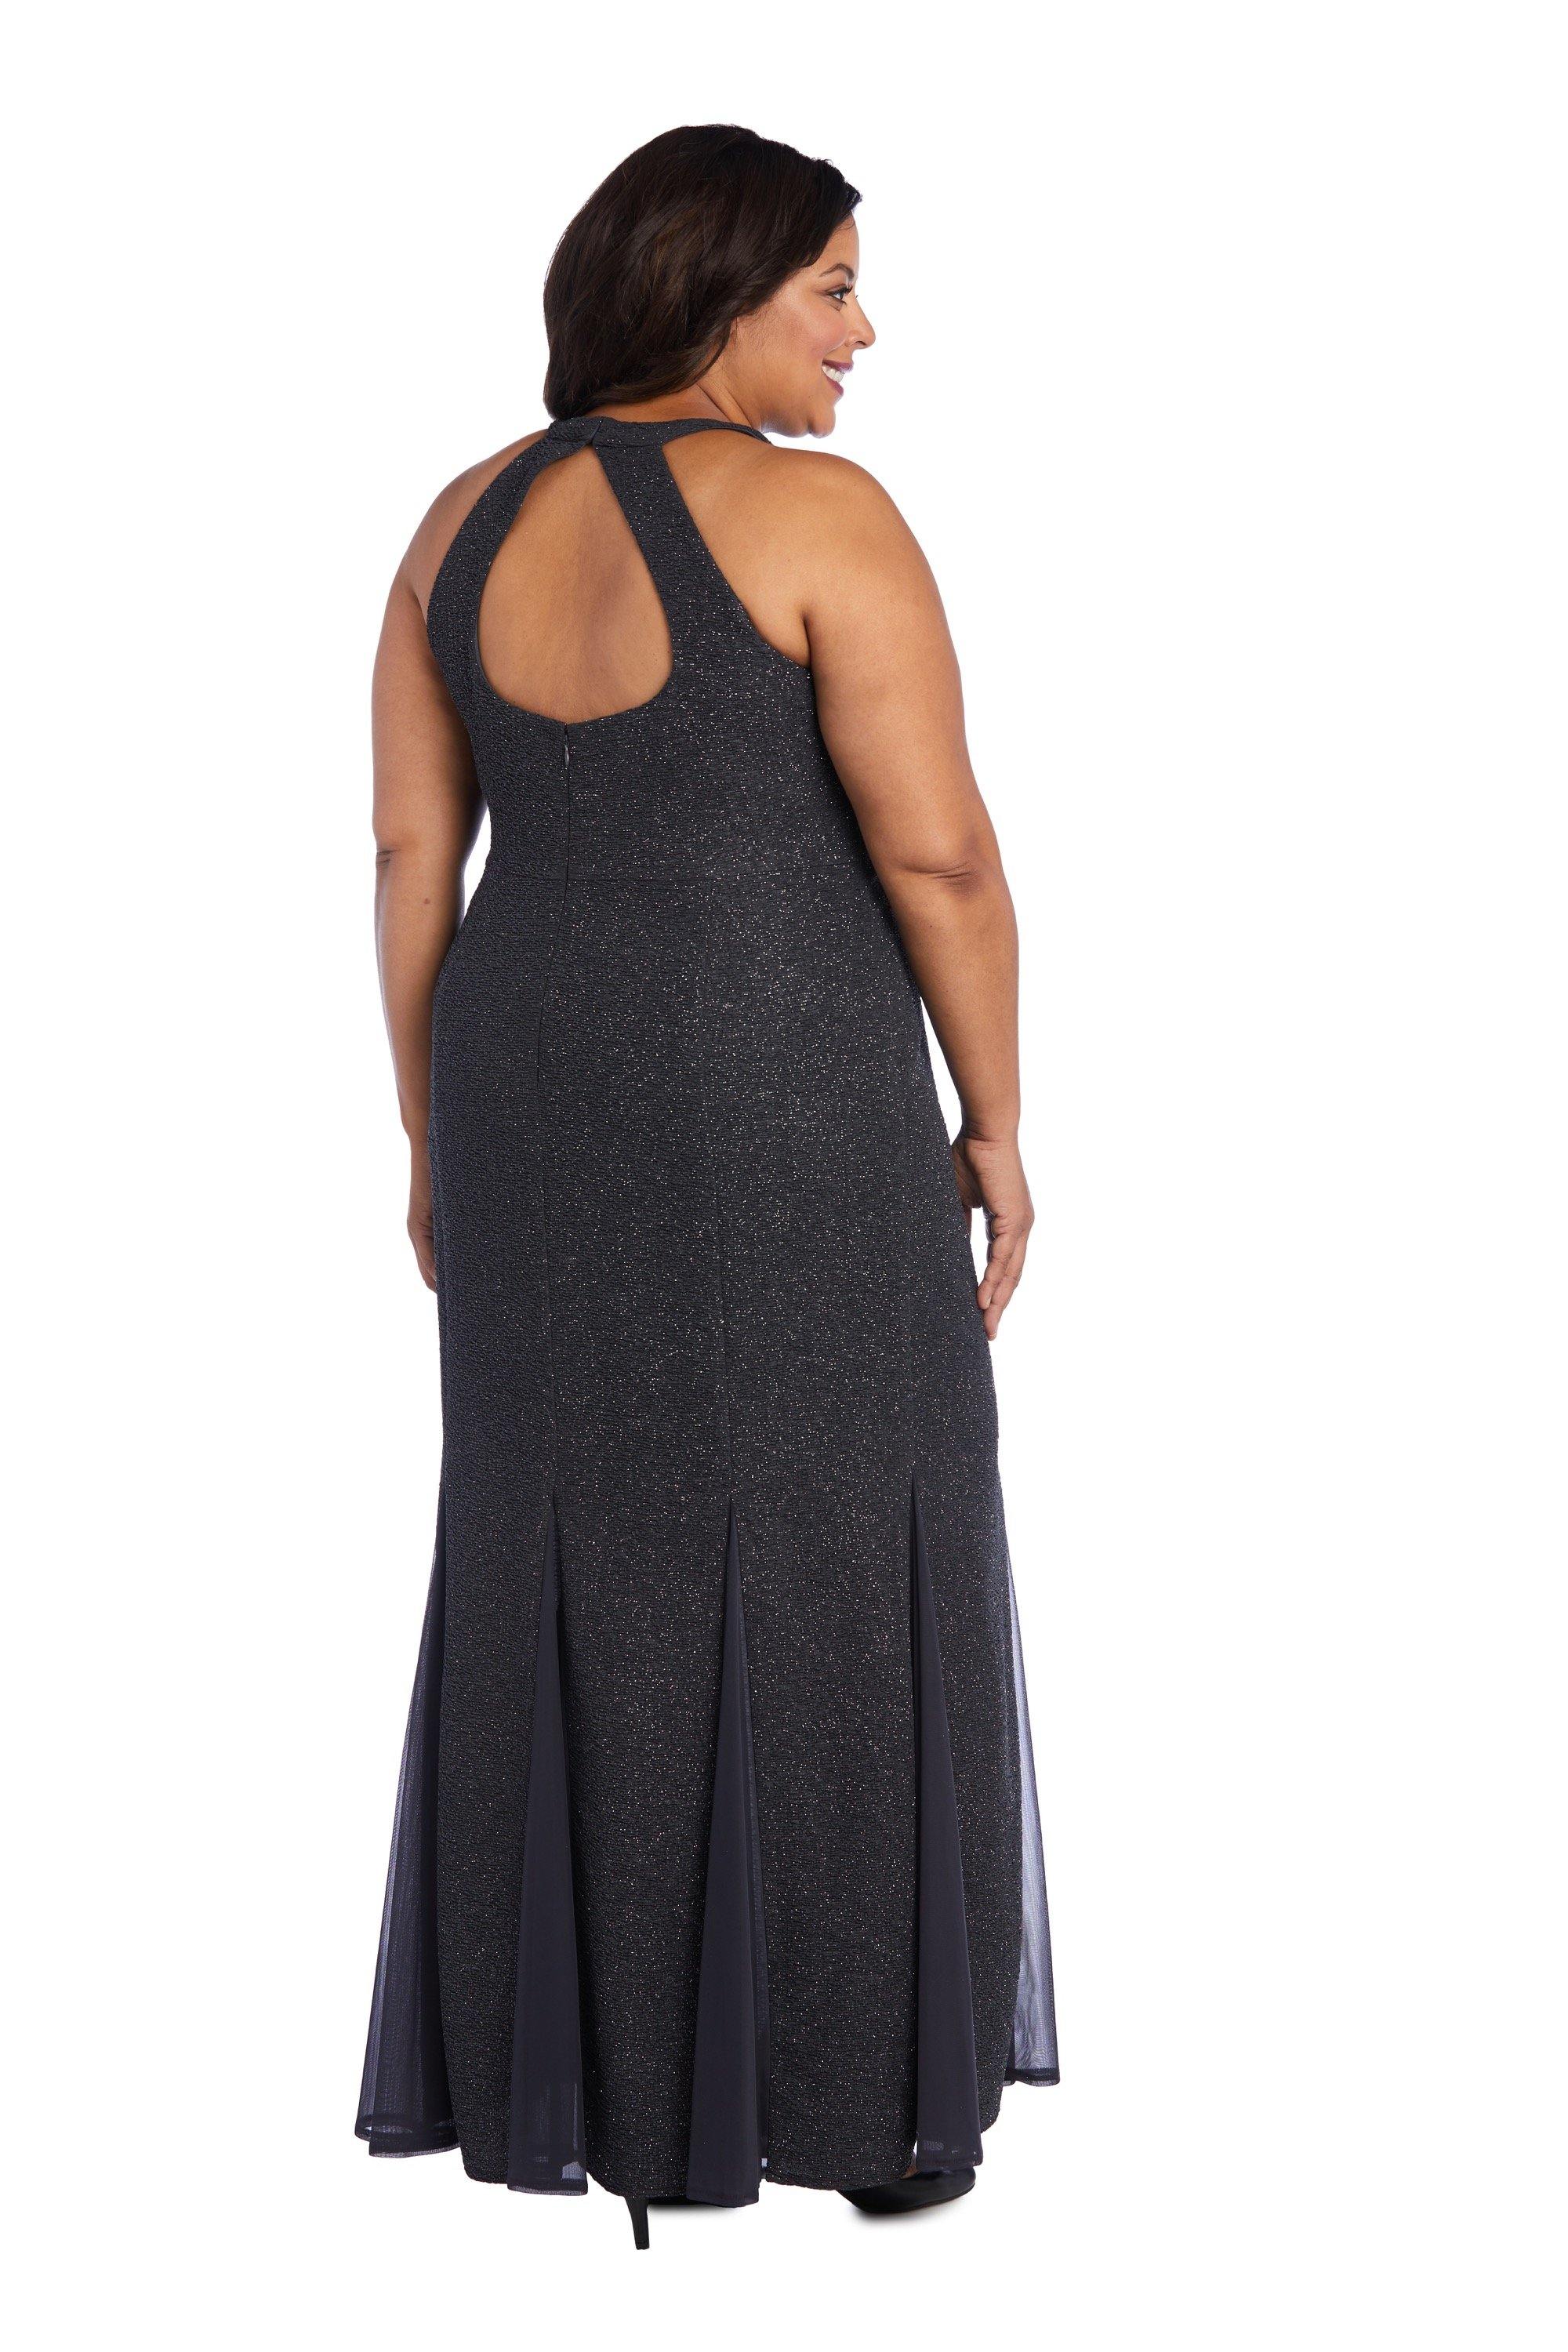 Nightway Long Plus Size Glitter Knit Dress 21555W | The Dress Outlet